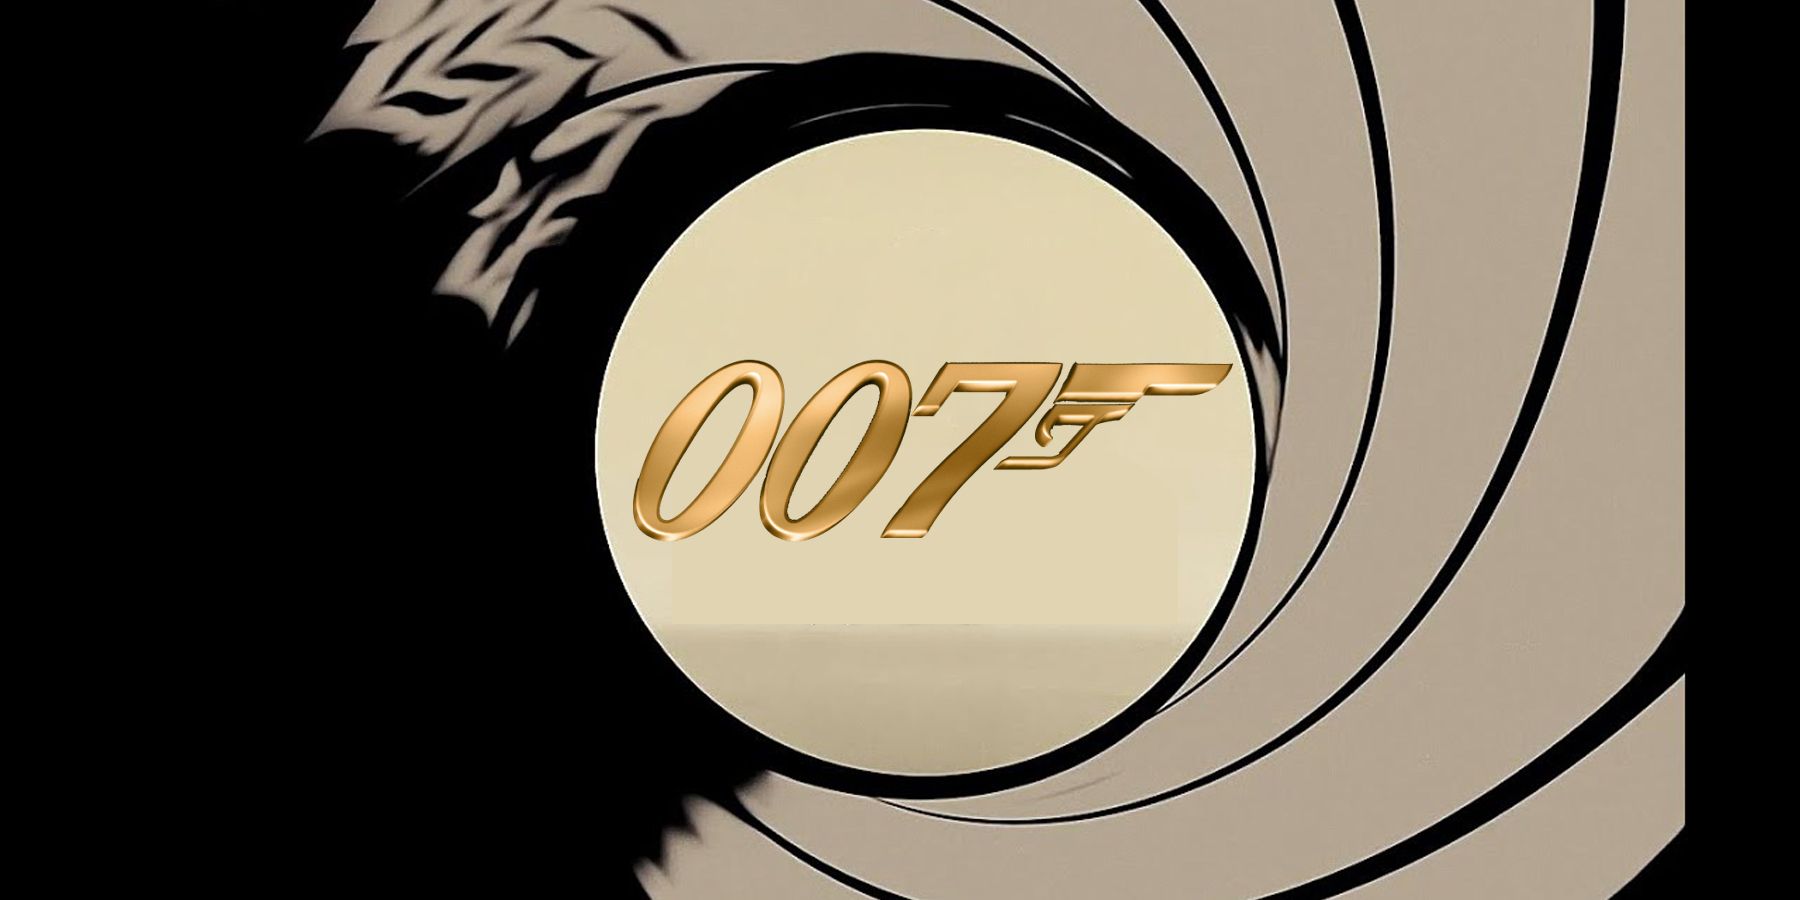 James Bond Younger Actors Casting Director